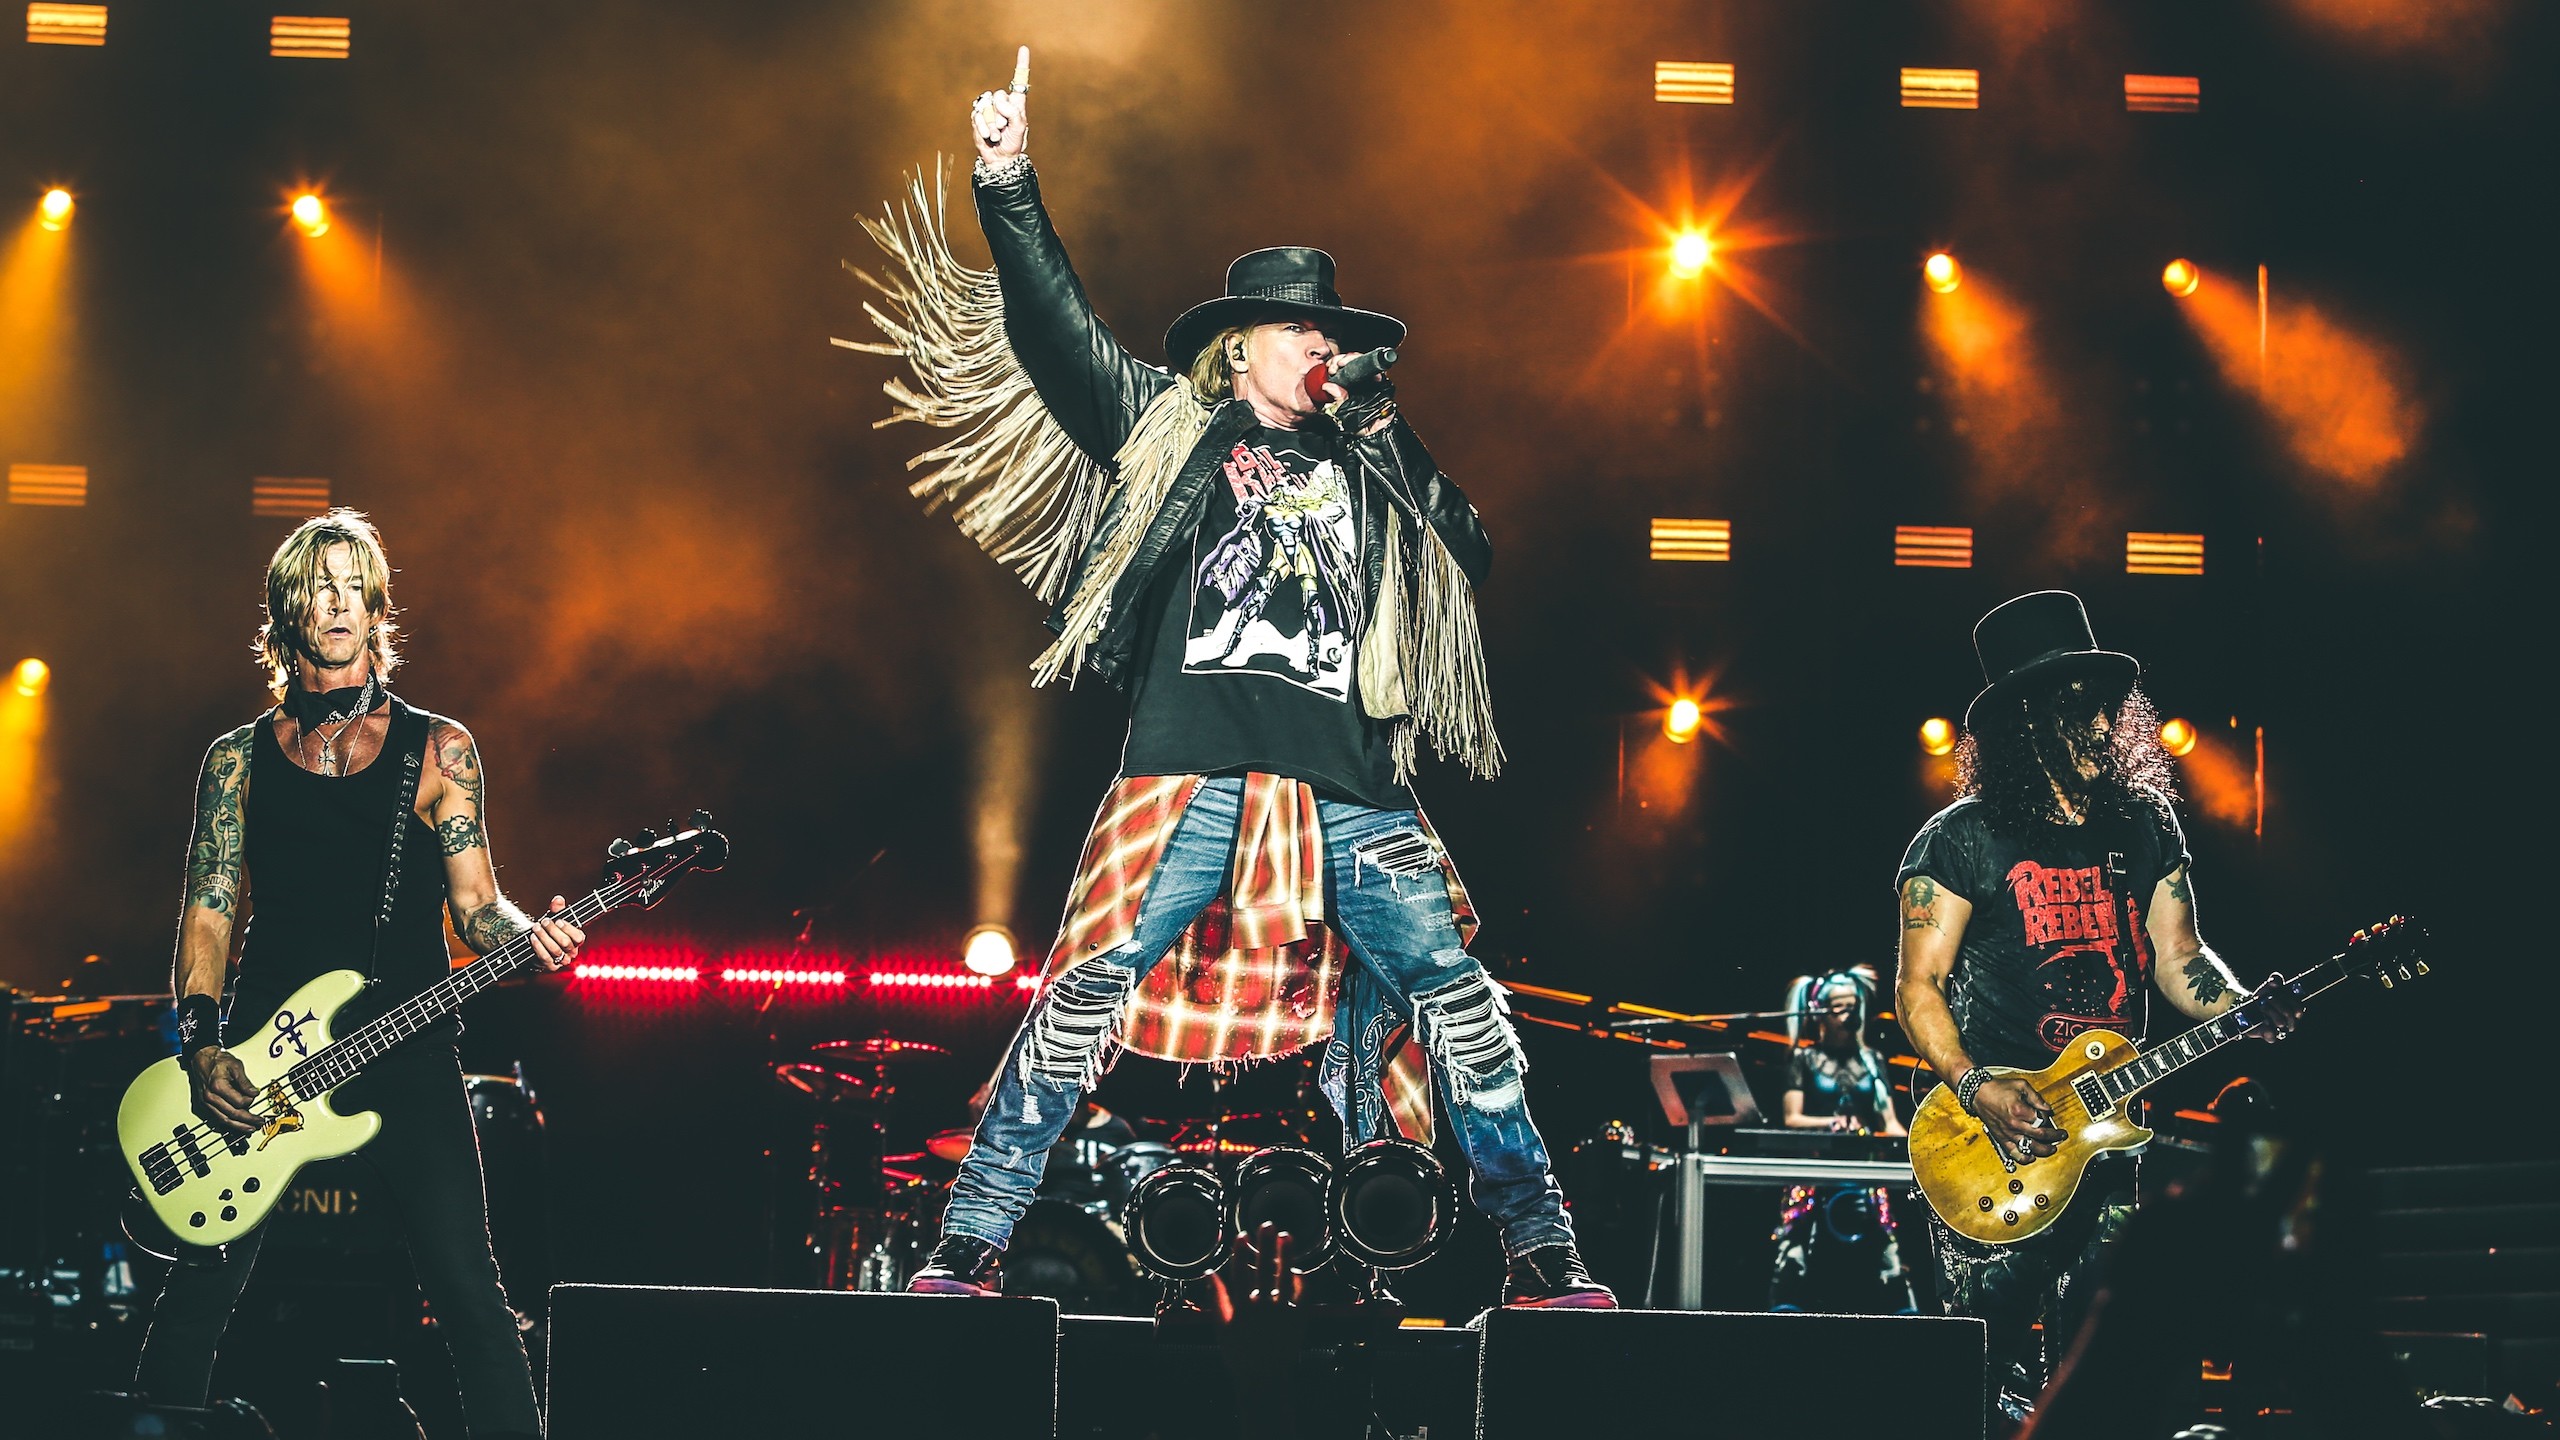 Kabar baik buat pecinta metal, Guns n' Roses resmi manggung di Jakarta